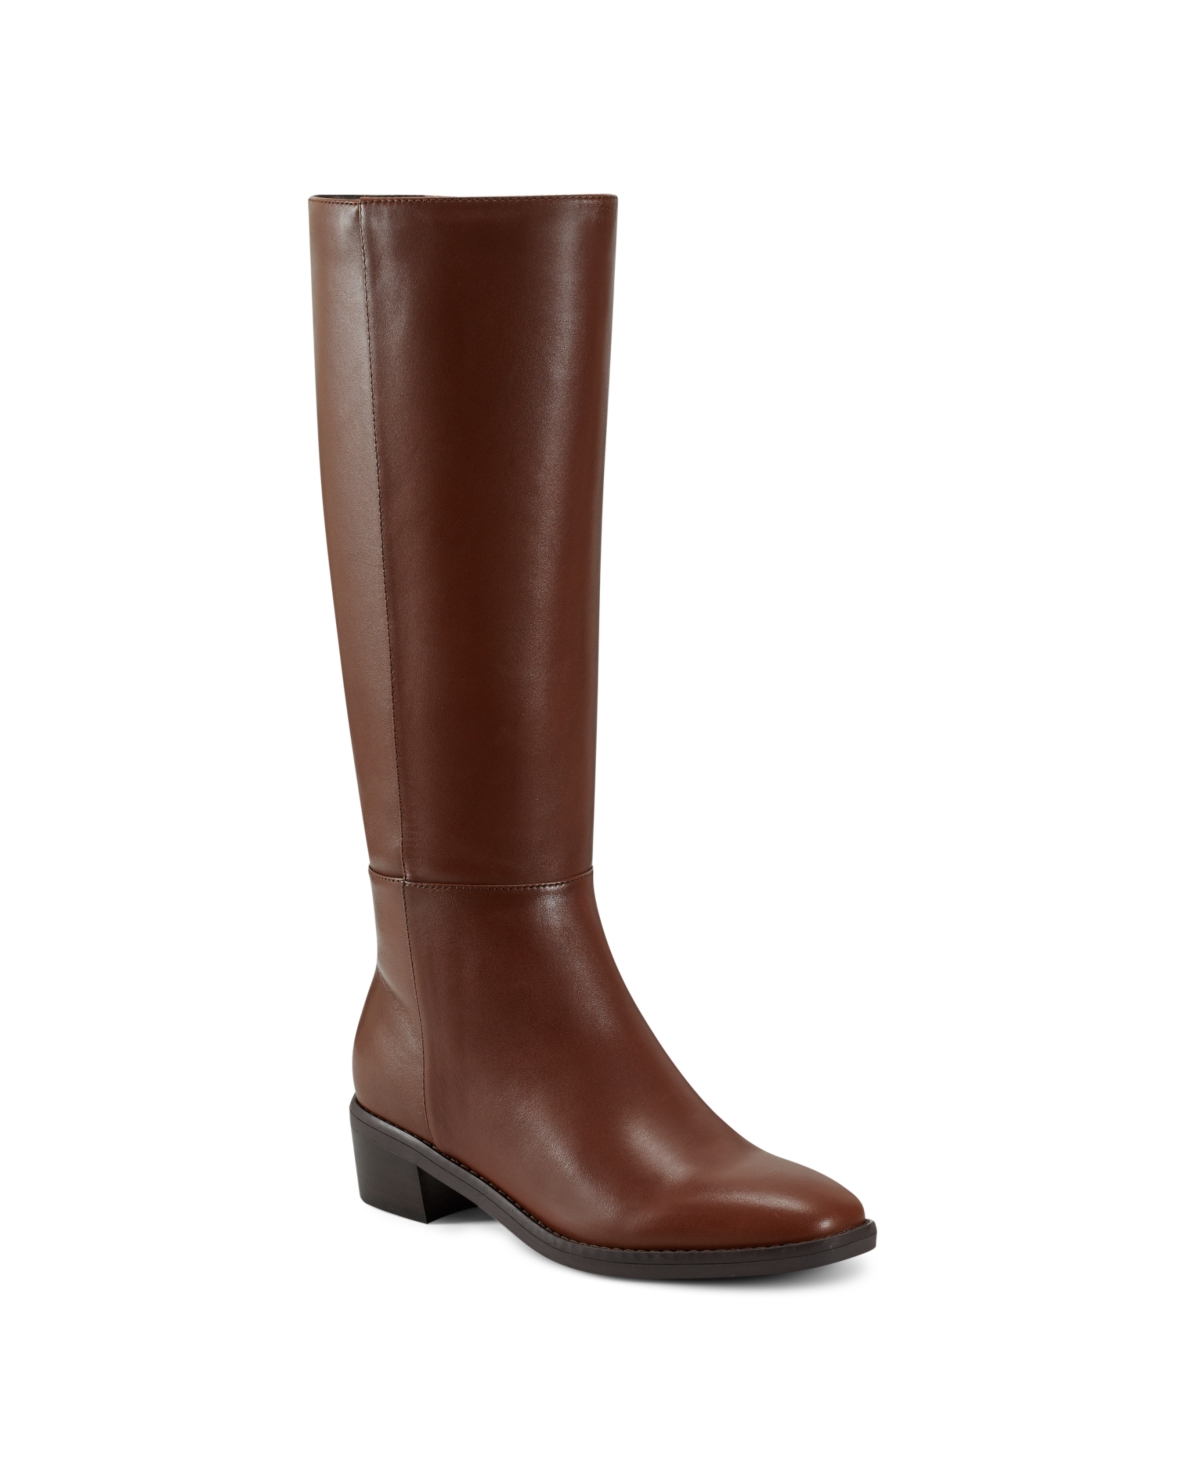 Women's Loretta Block Heel Casual Regular Calf Riding Boots - Medium Brown Leather